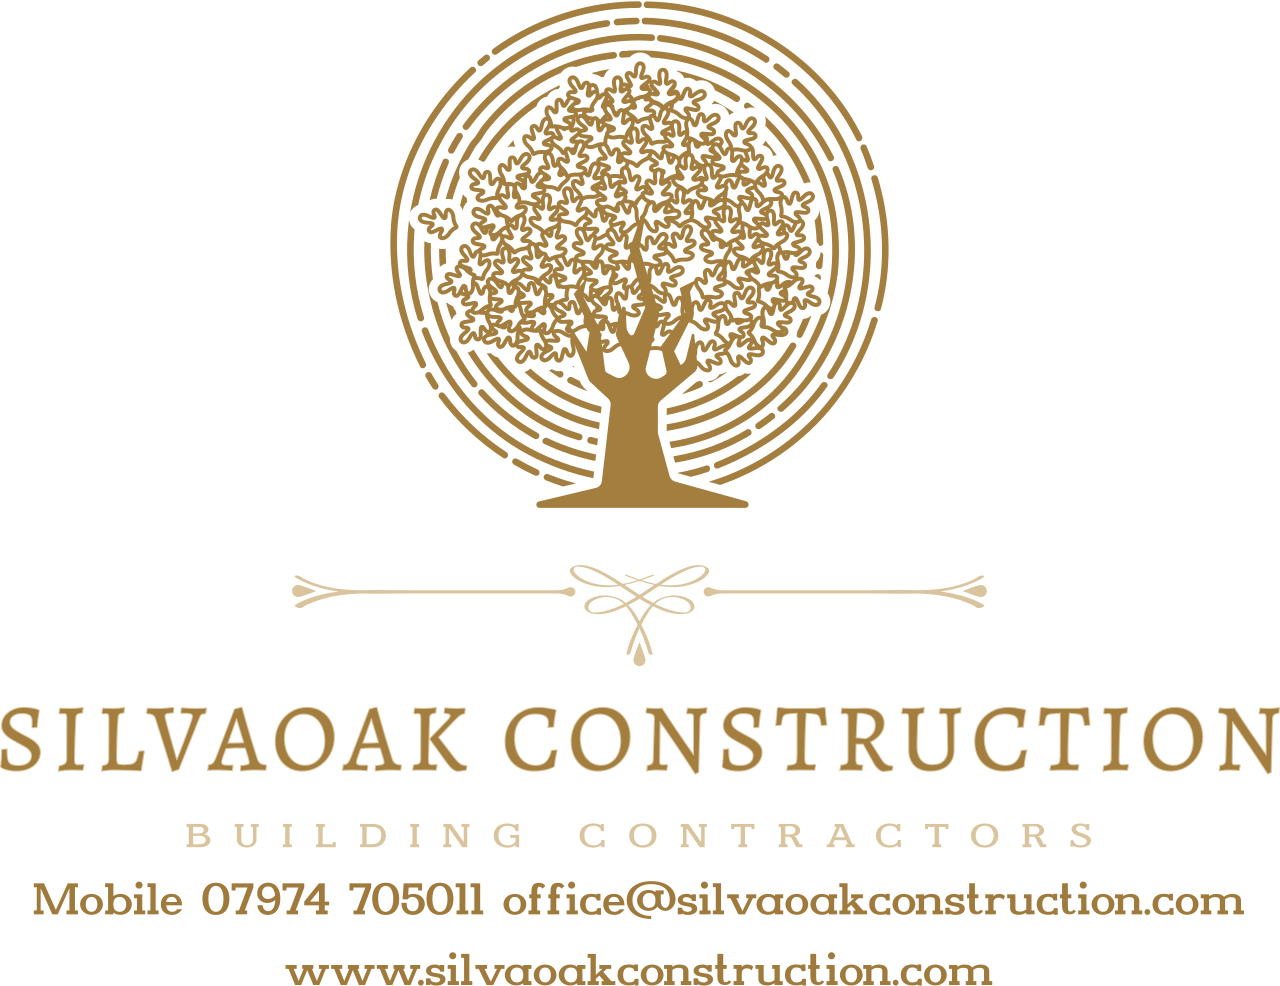 Silvaoak construction's web page